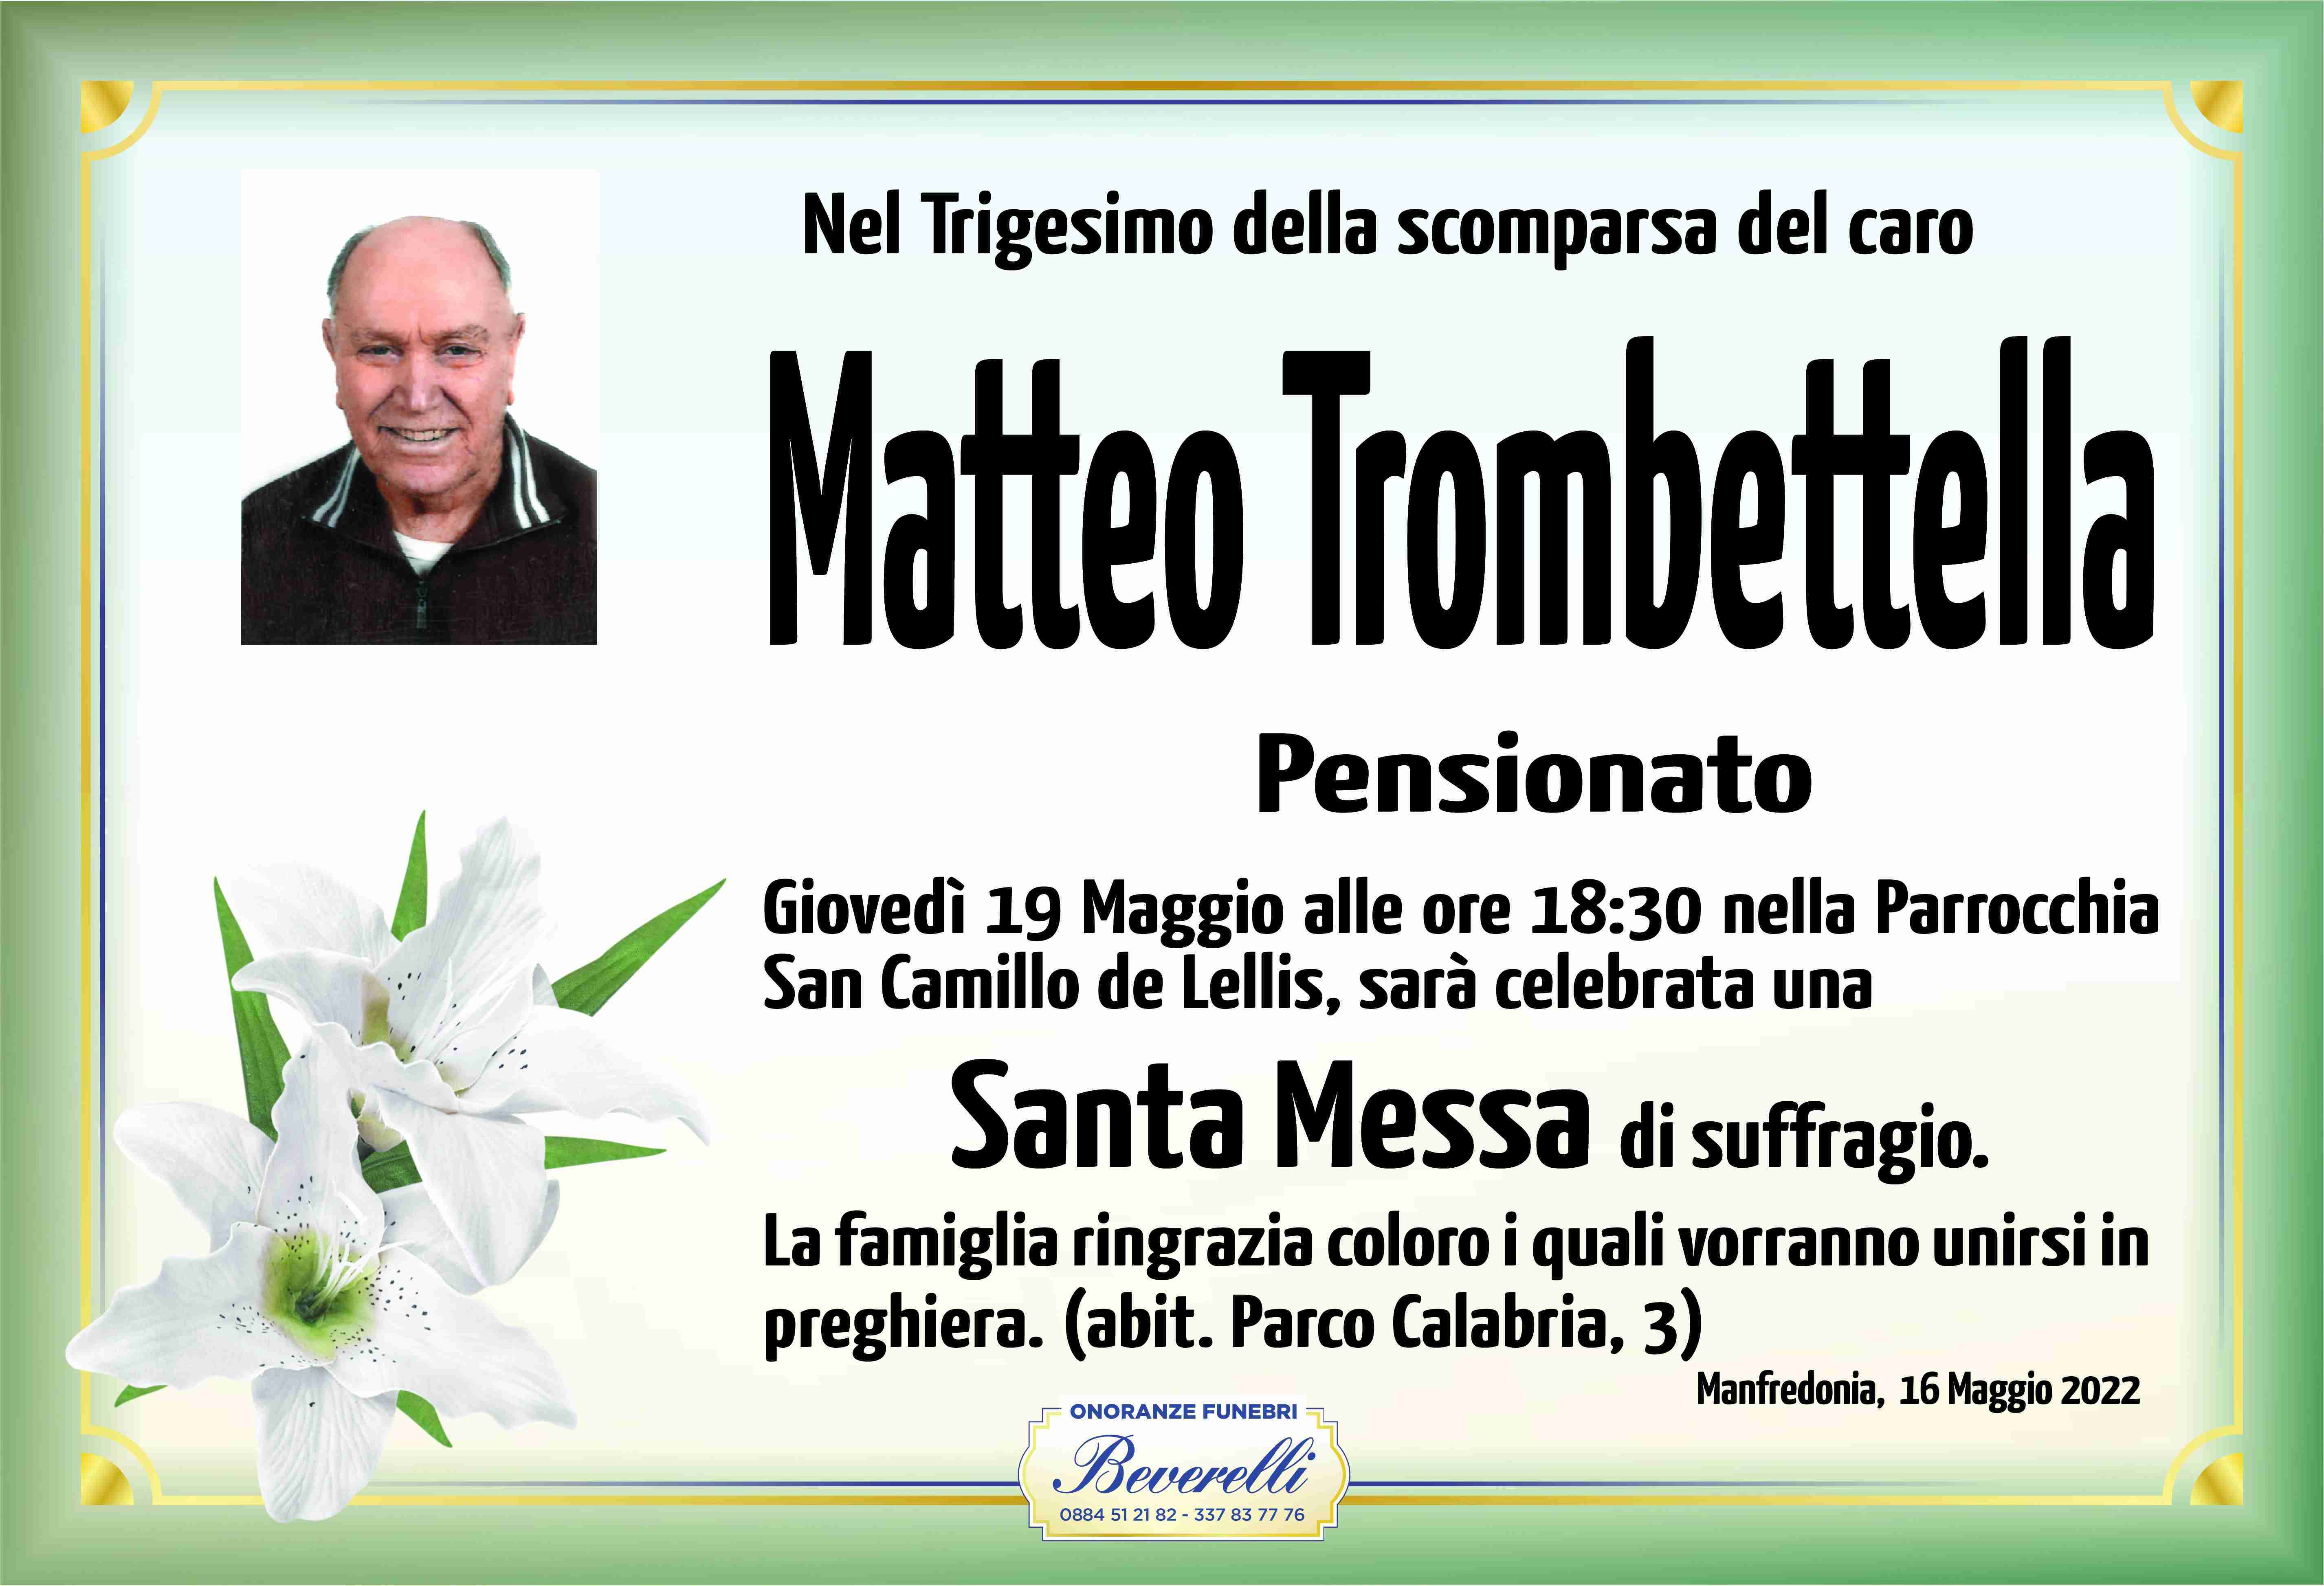 Matteo Trombettella